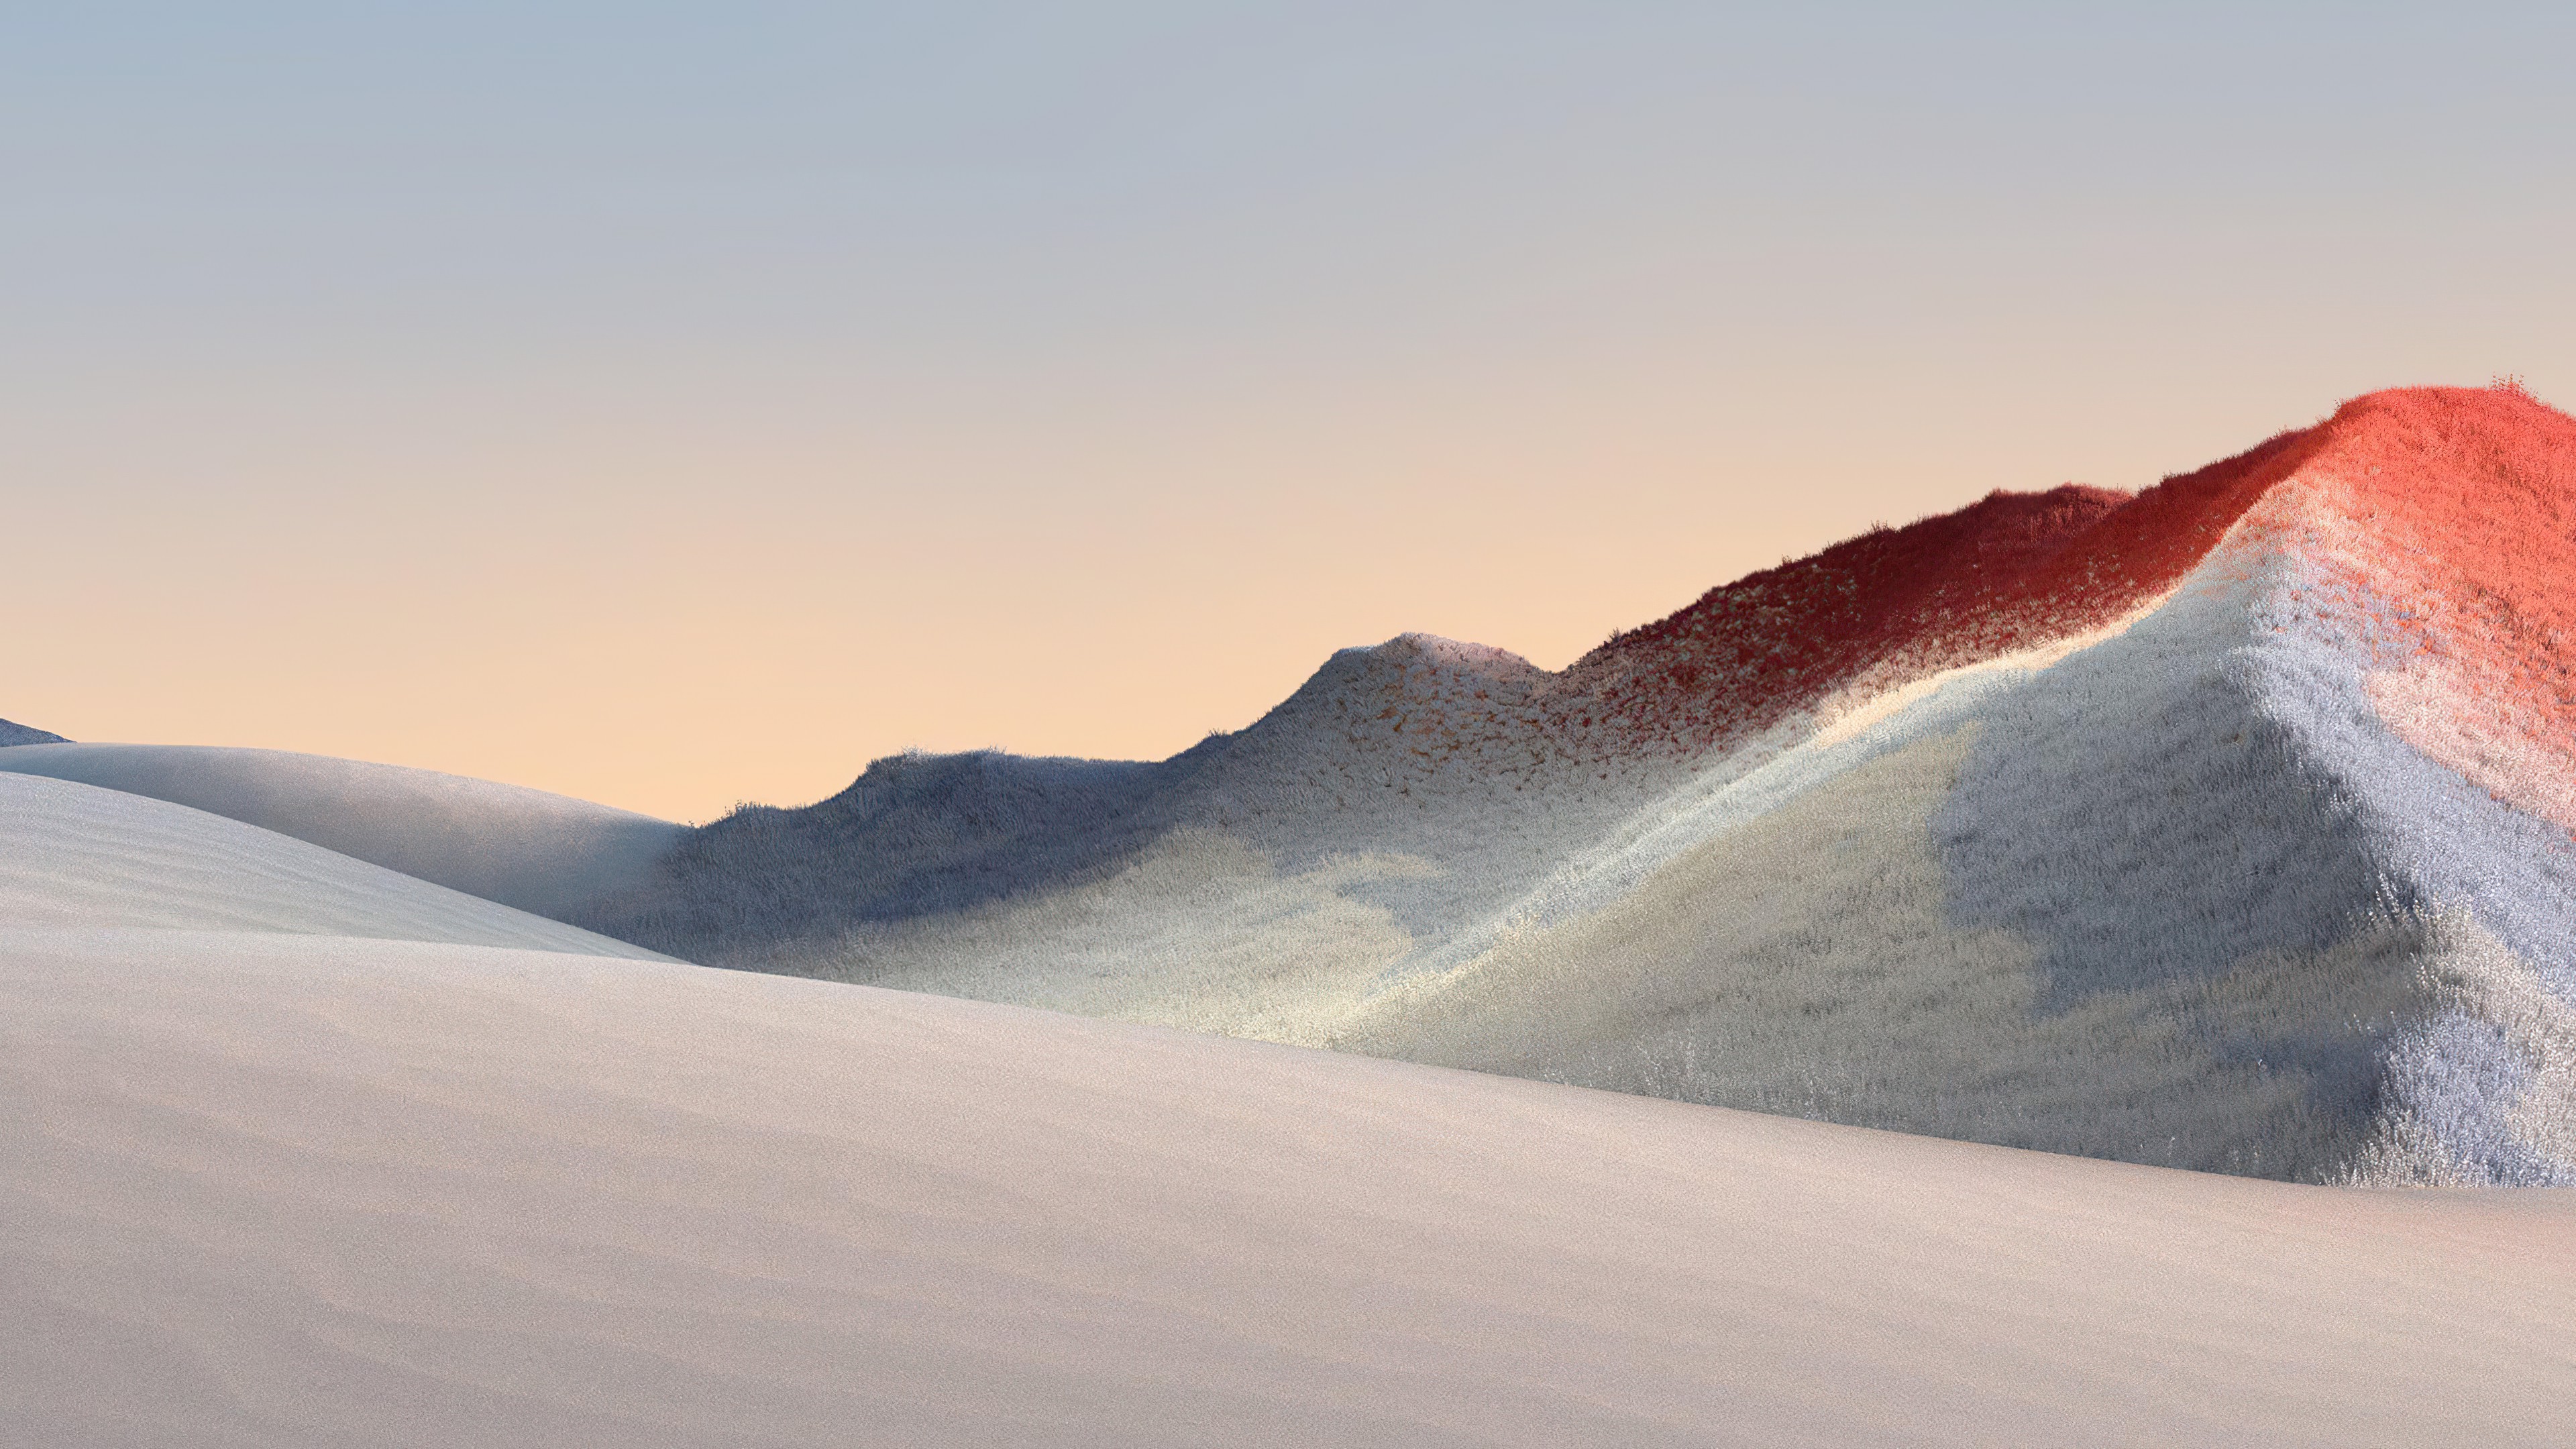 Fondos de pantalla Paisaje digital de montañas deserticas